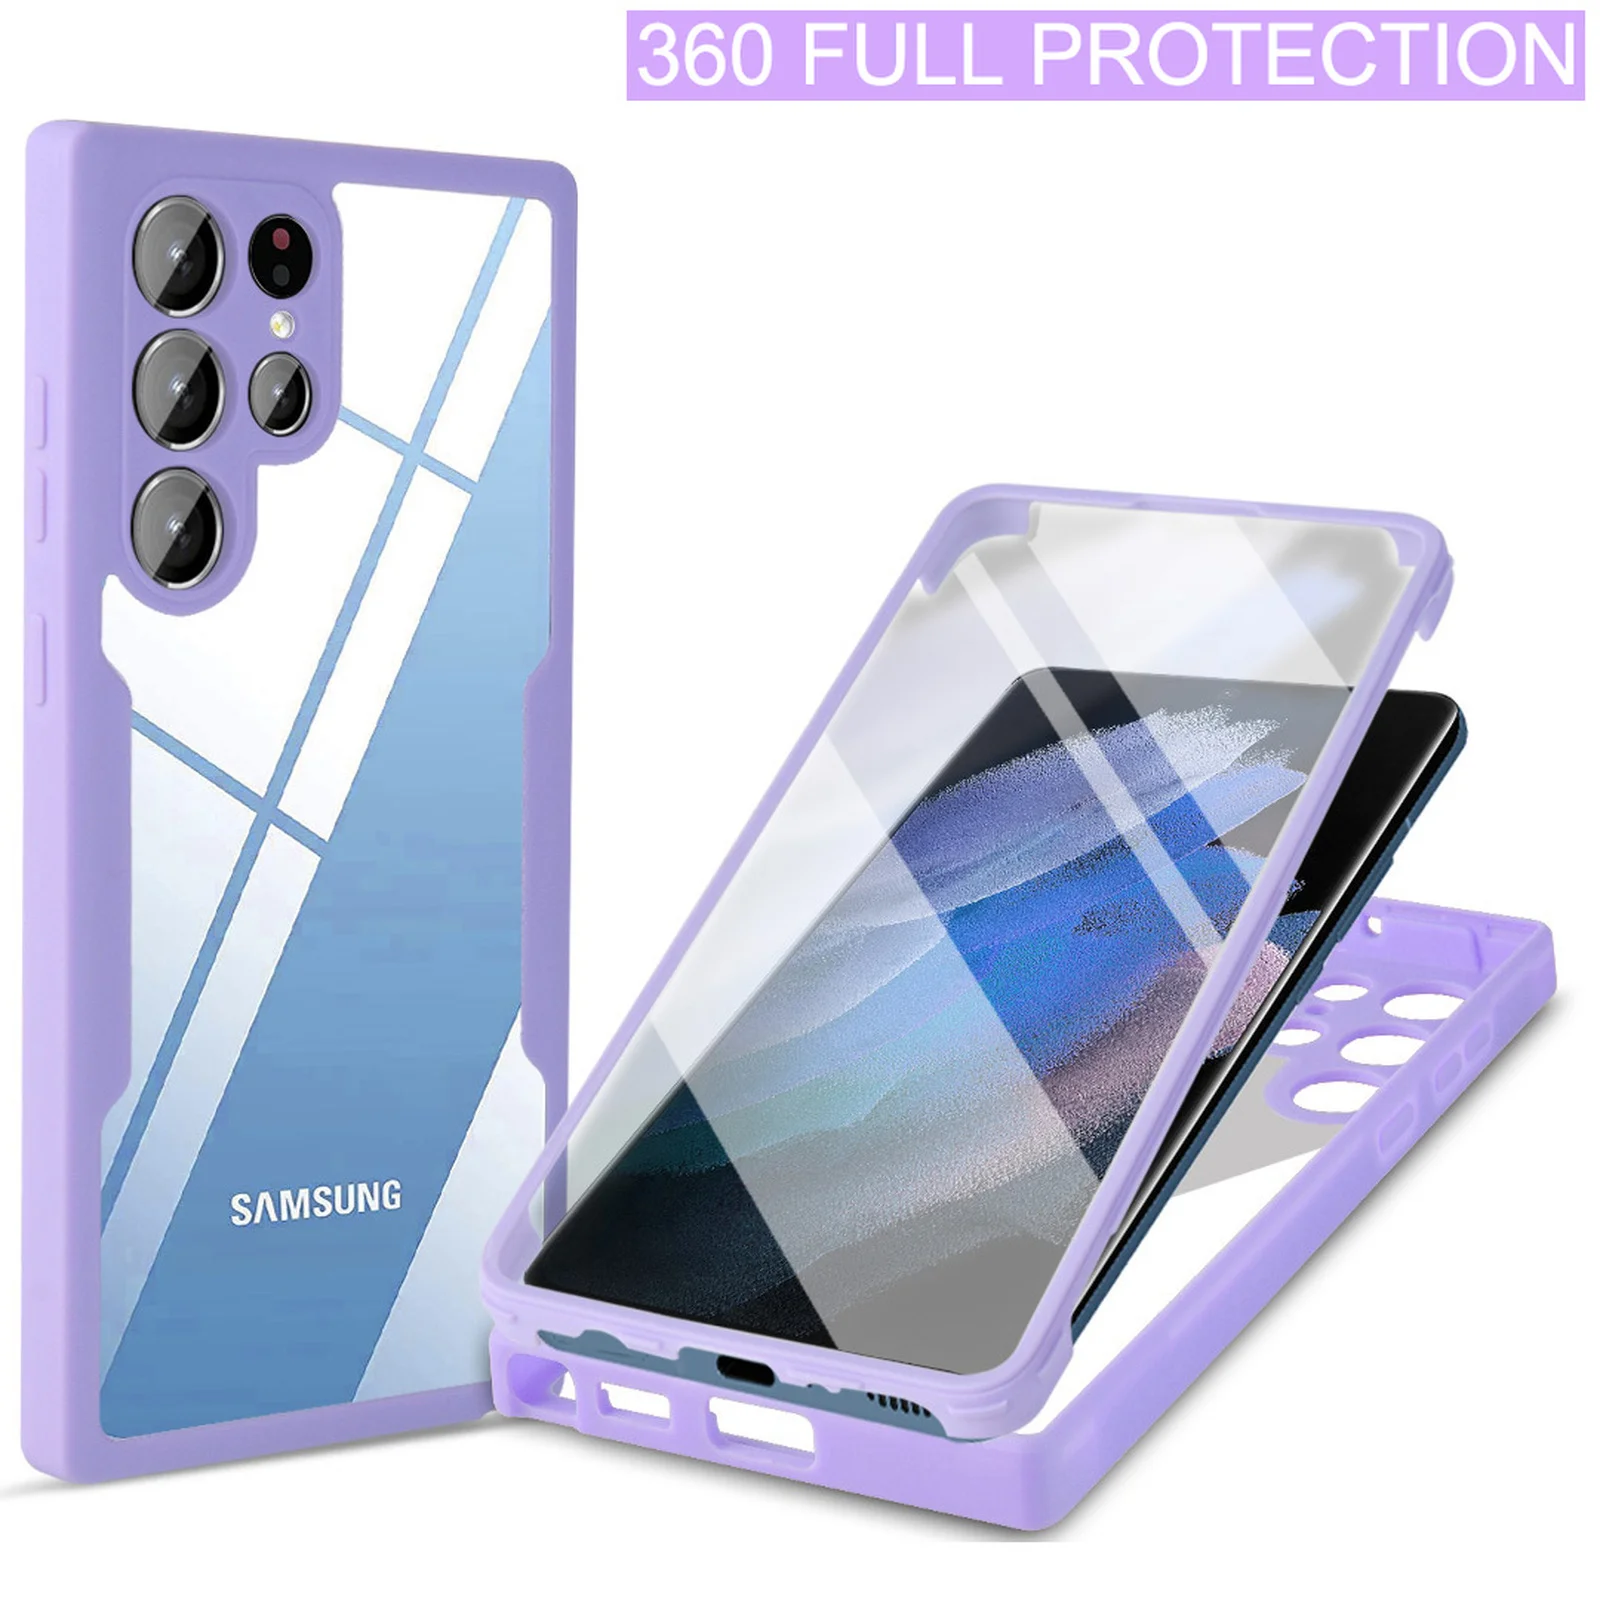 360 All Inclusive Case For Samsung S22 Ultra S21 Plus FE A72 A22 A12 A32 A52 A72 A82 A21S A51 A71 A13 A33 A53 Front+Back Cover kawaii phone case samsung Cases For Samsung